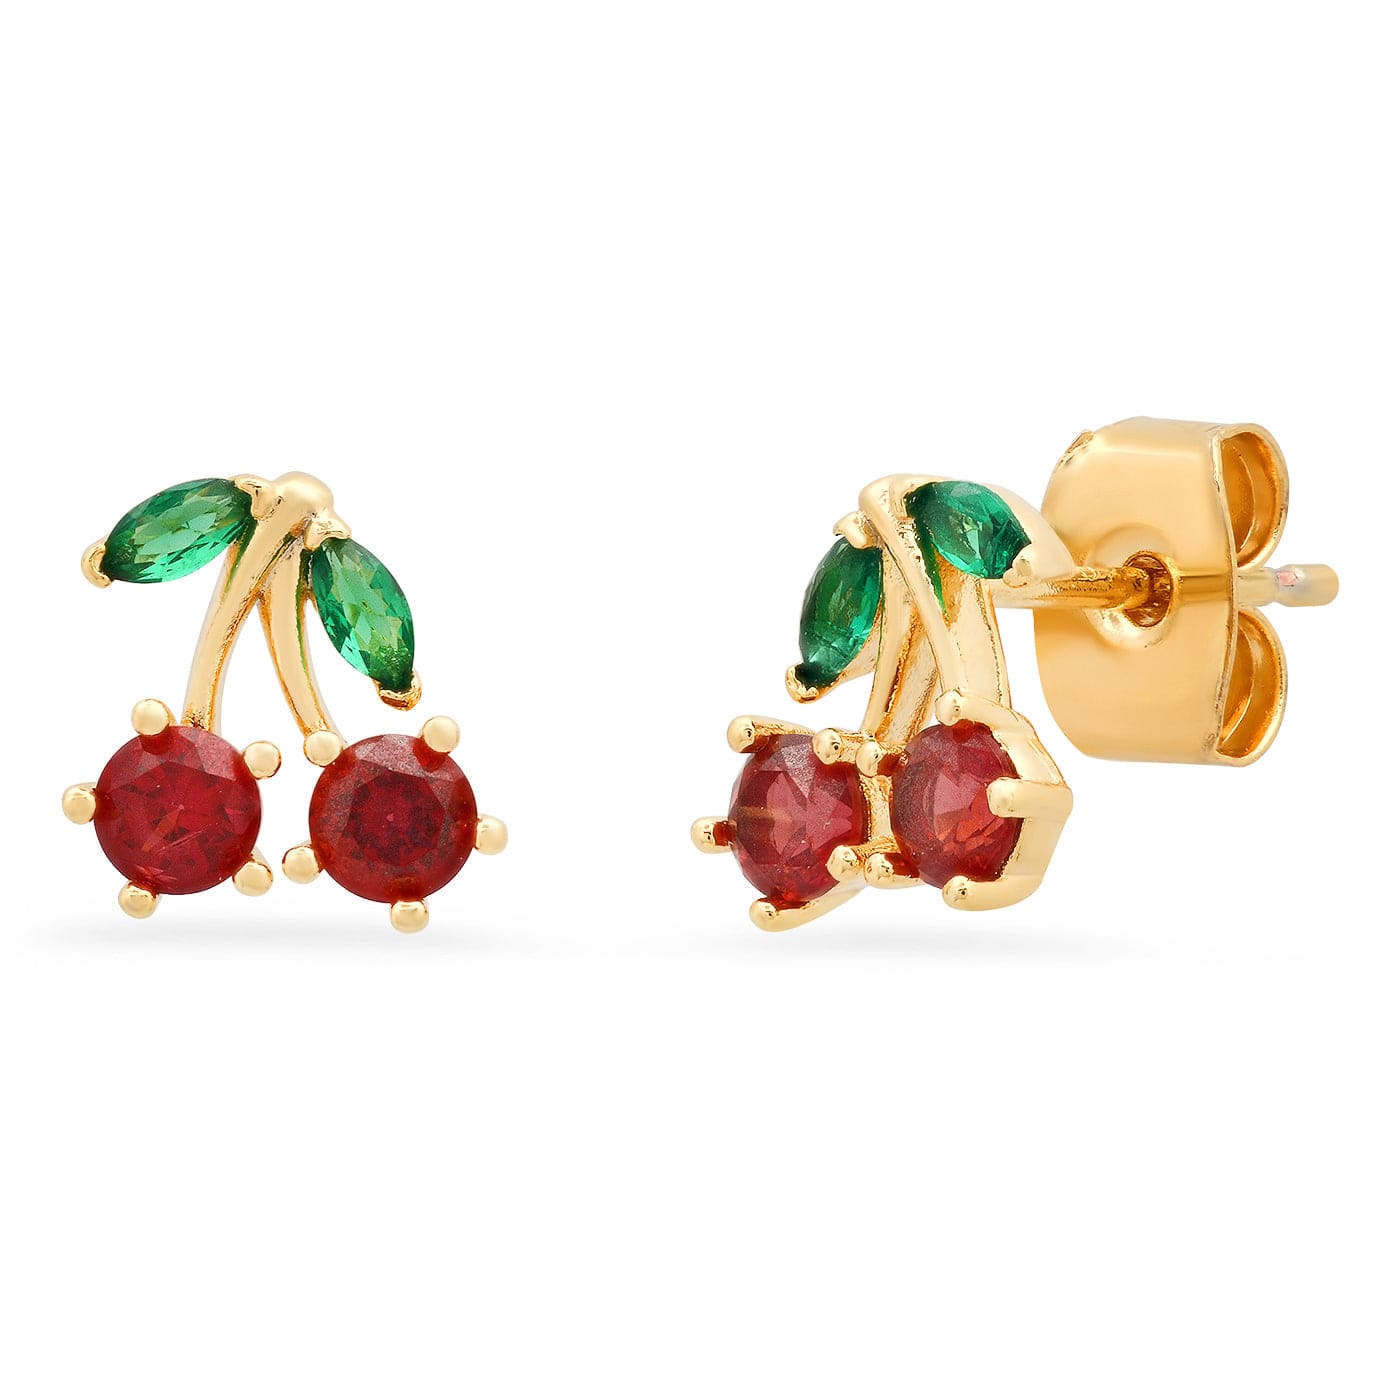 TAI JEWELRY Earrings Juicy Cherry Studs